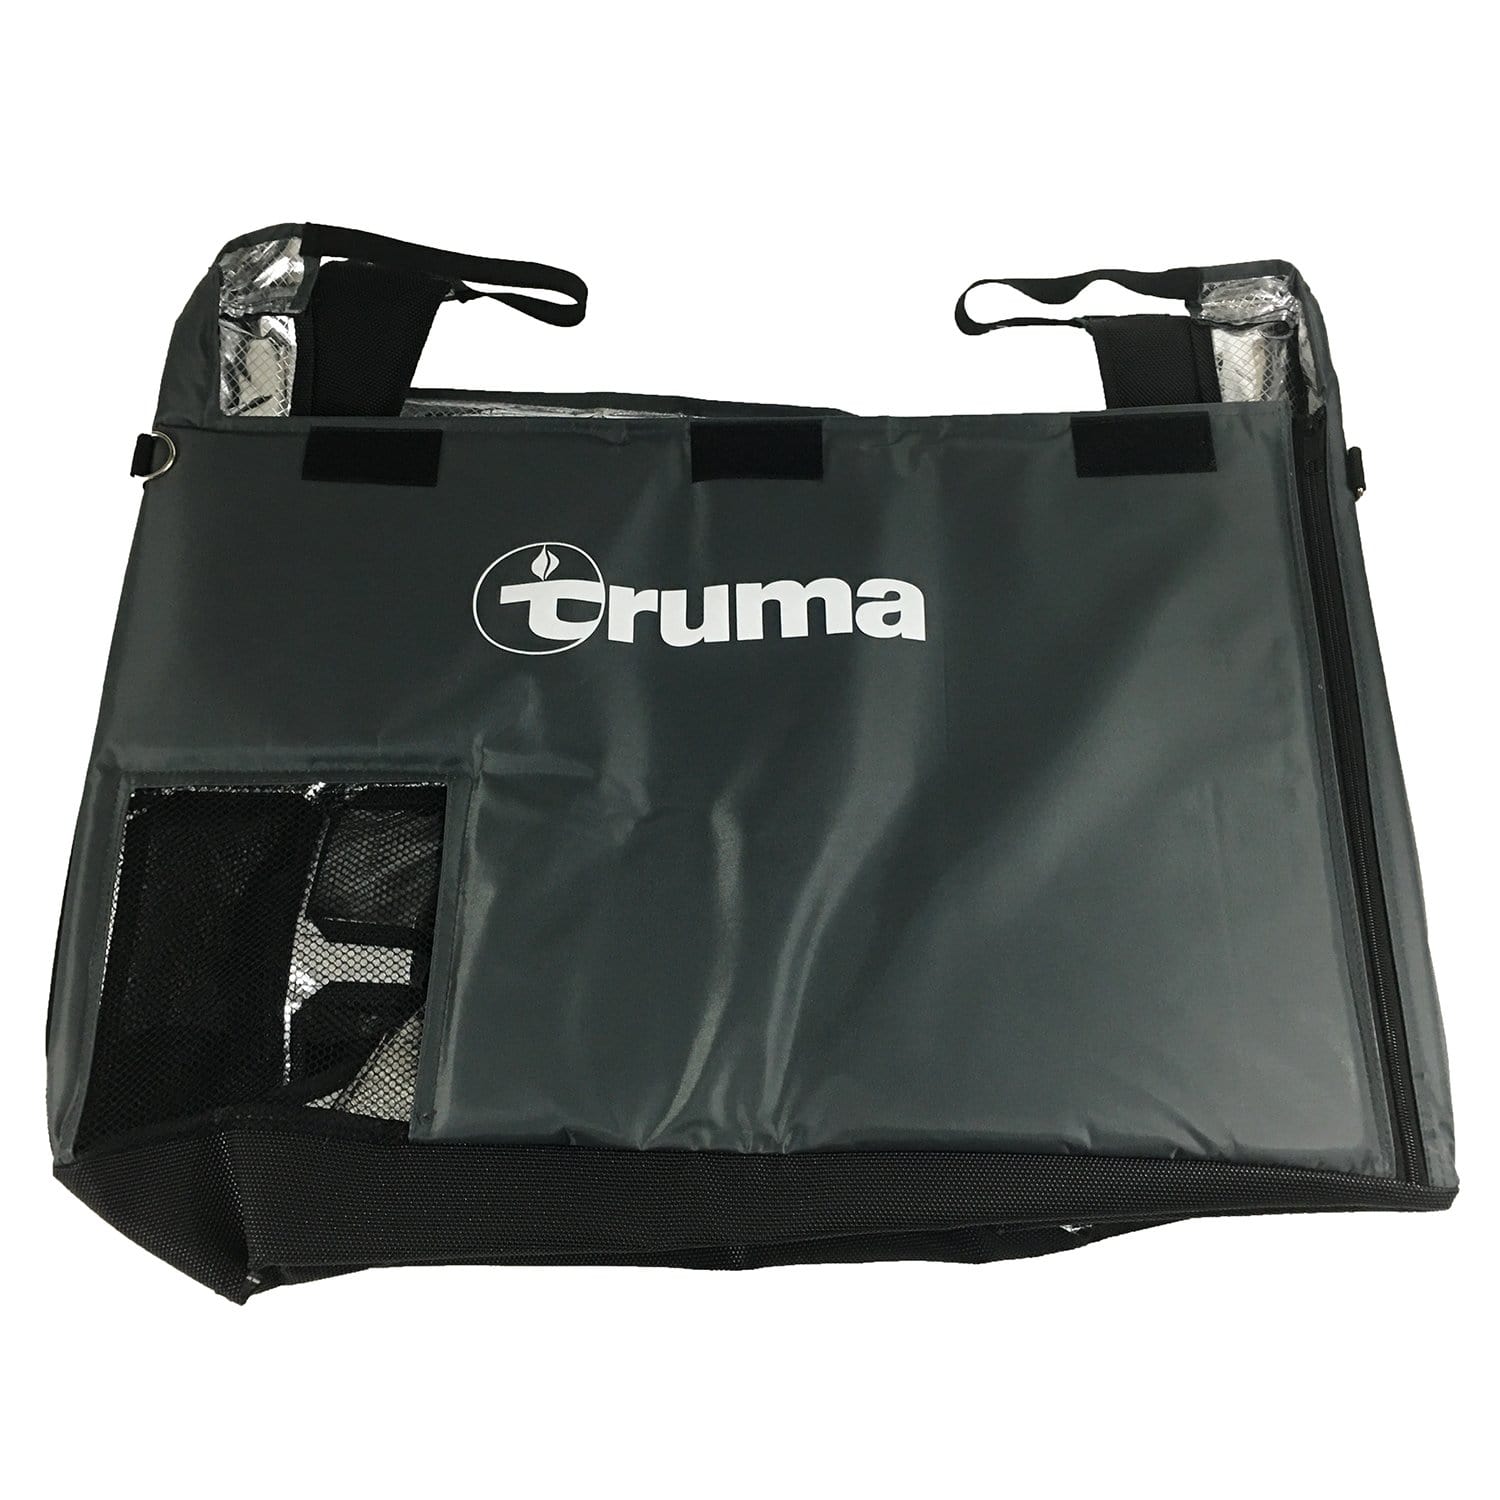 Truma Cooler 40955-04 Insulating Cover for C60 Portable Fridge / Freezer